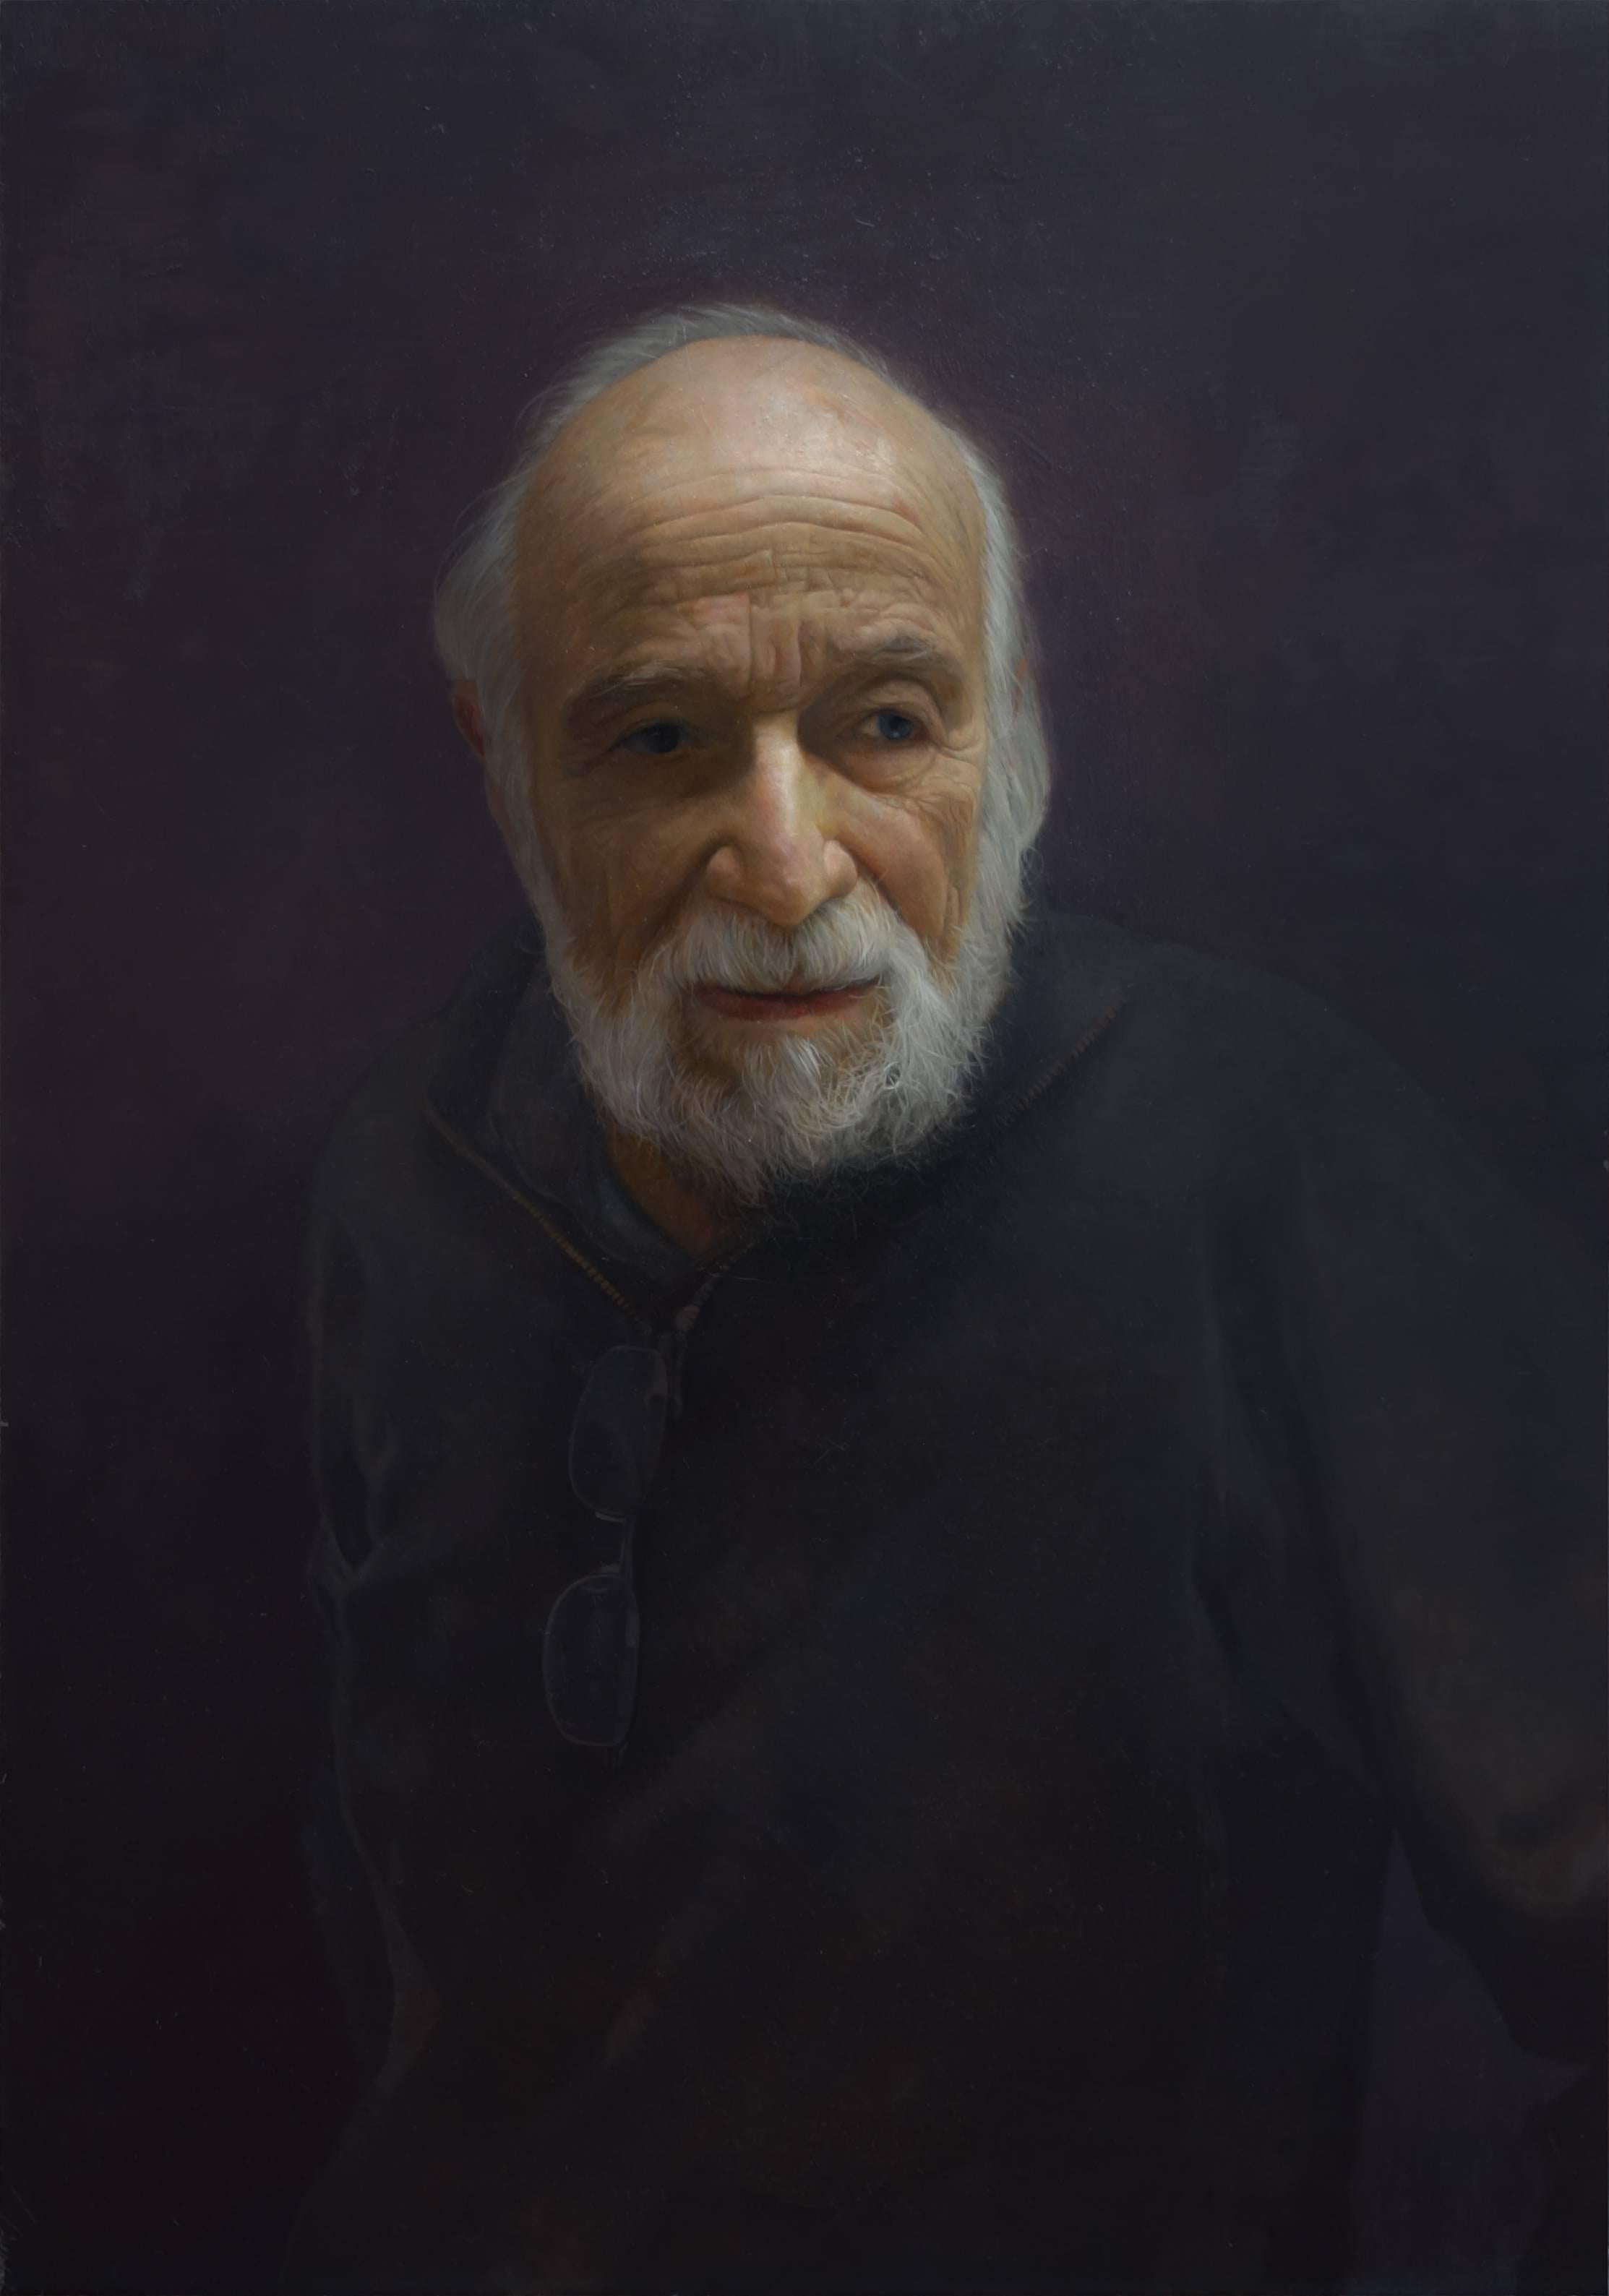 David Kassan Portrait Painting - BURTON SILVERMAN, portrait of man, black sweater, portrait, photo-realism